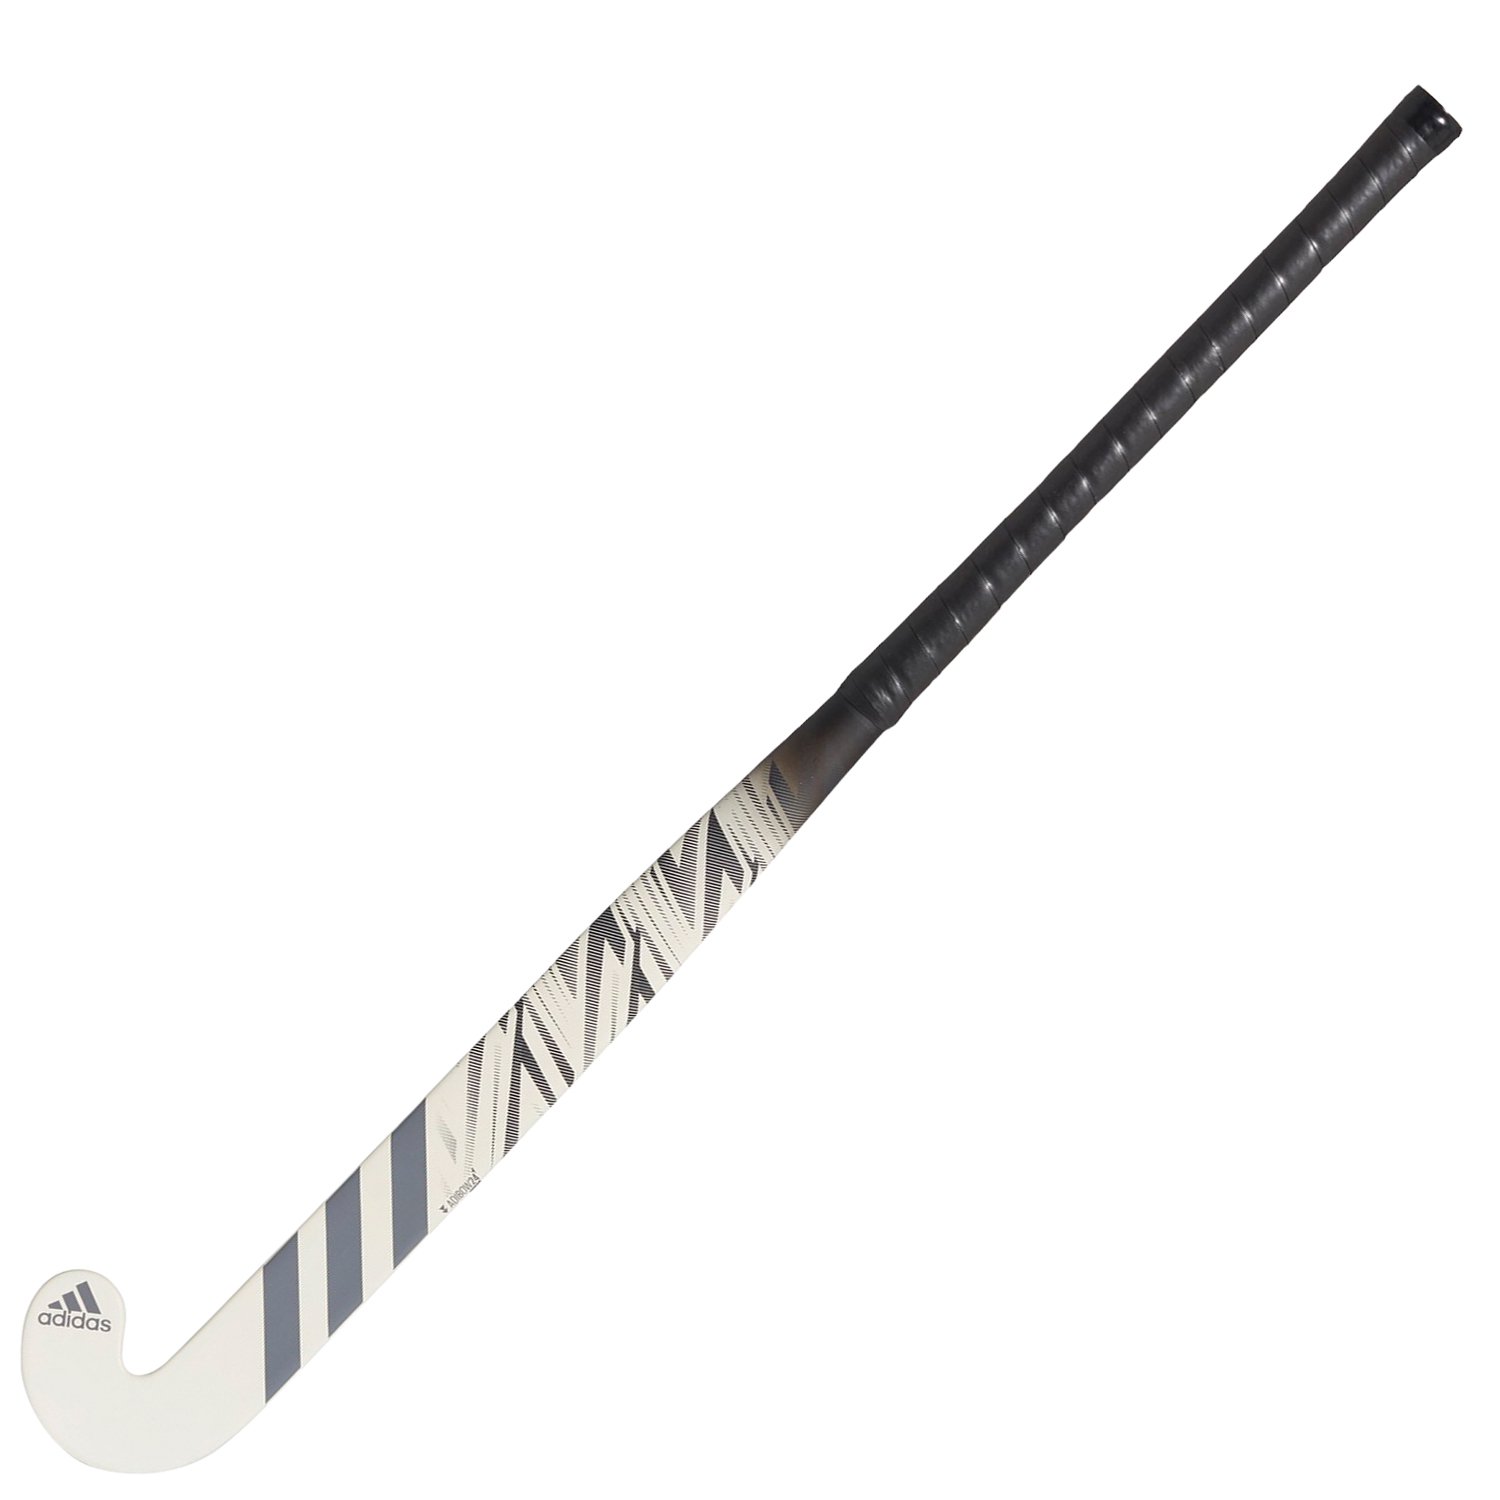 hacer los deberes testimonio presumir LX24 Compo 6 Junior Stick (20) - Hockey Sticks | Just Hockey - Adidas 2020  JUNIORPROMO